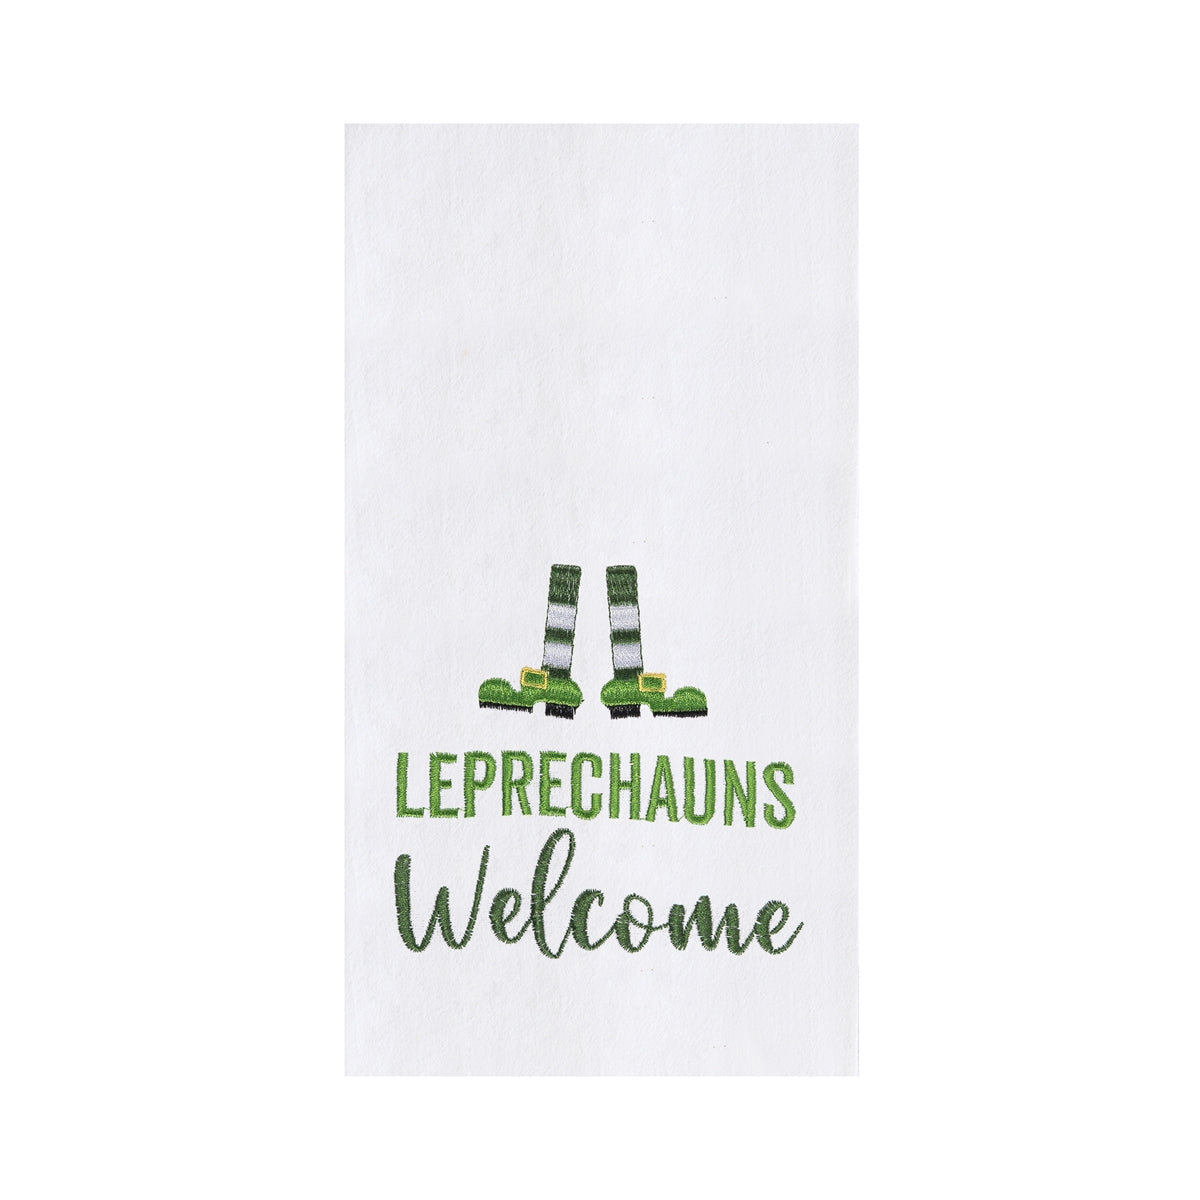 Leprechauns Welcome Towel